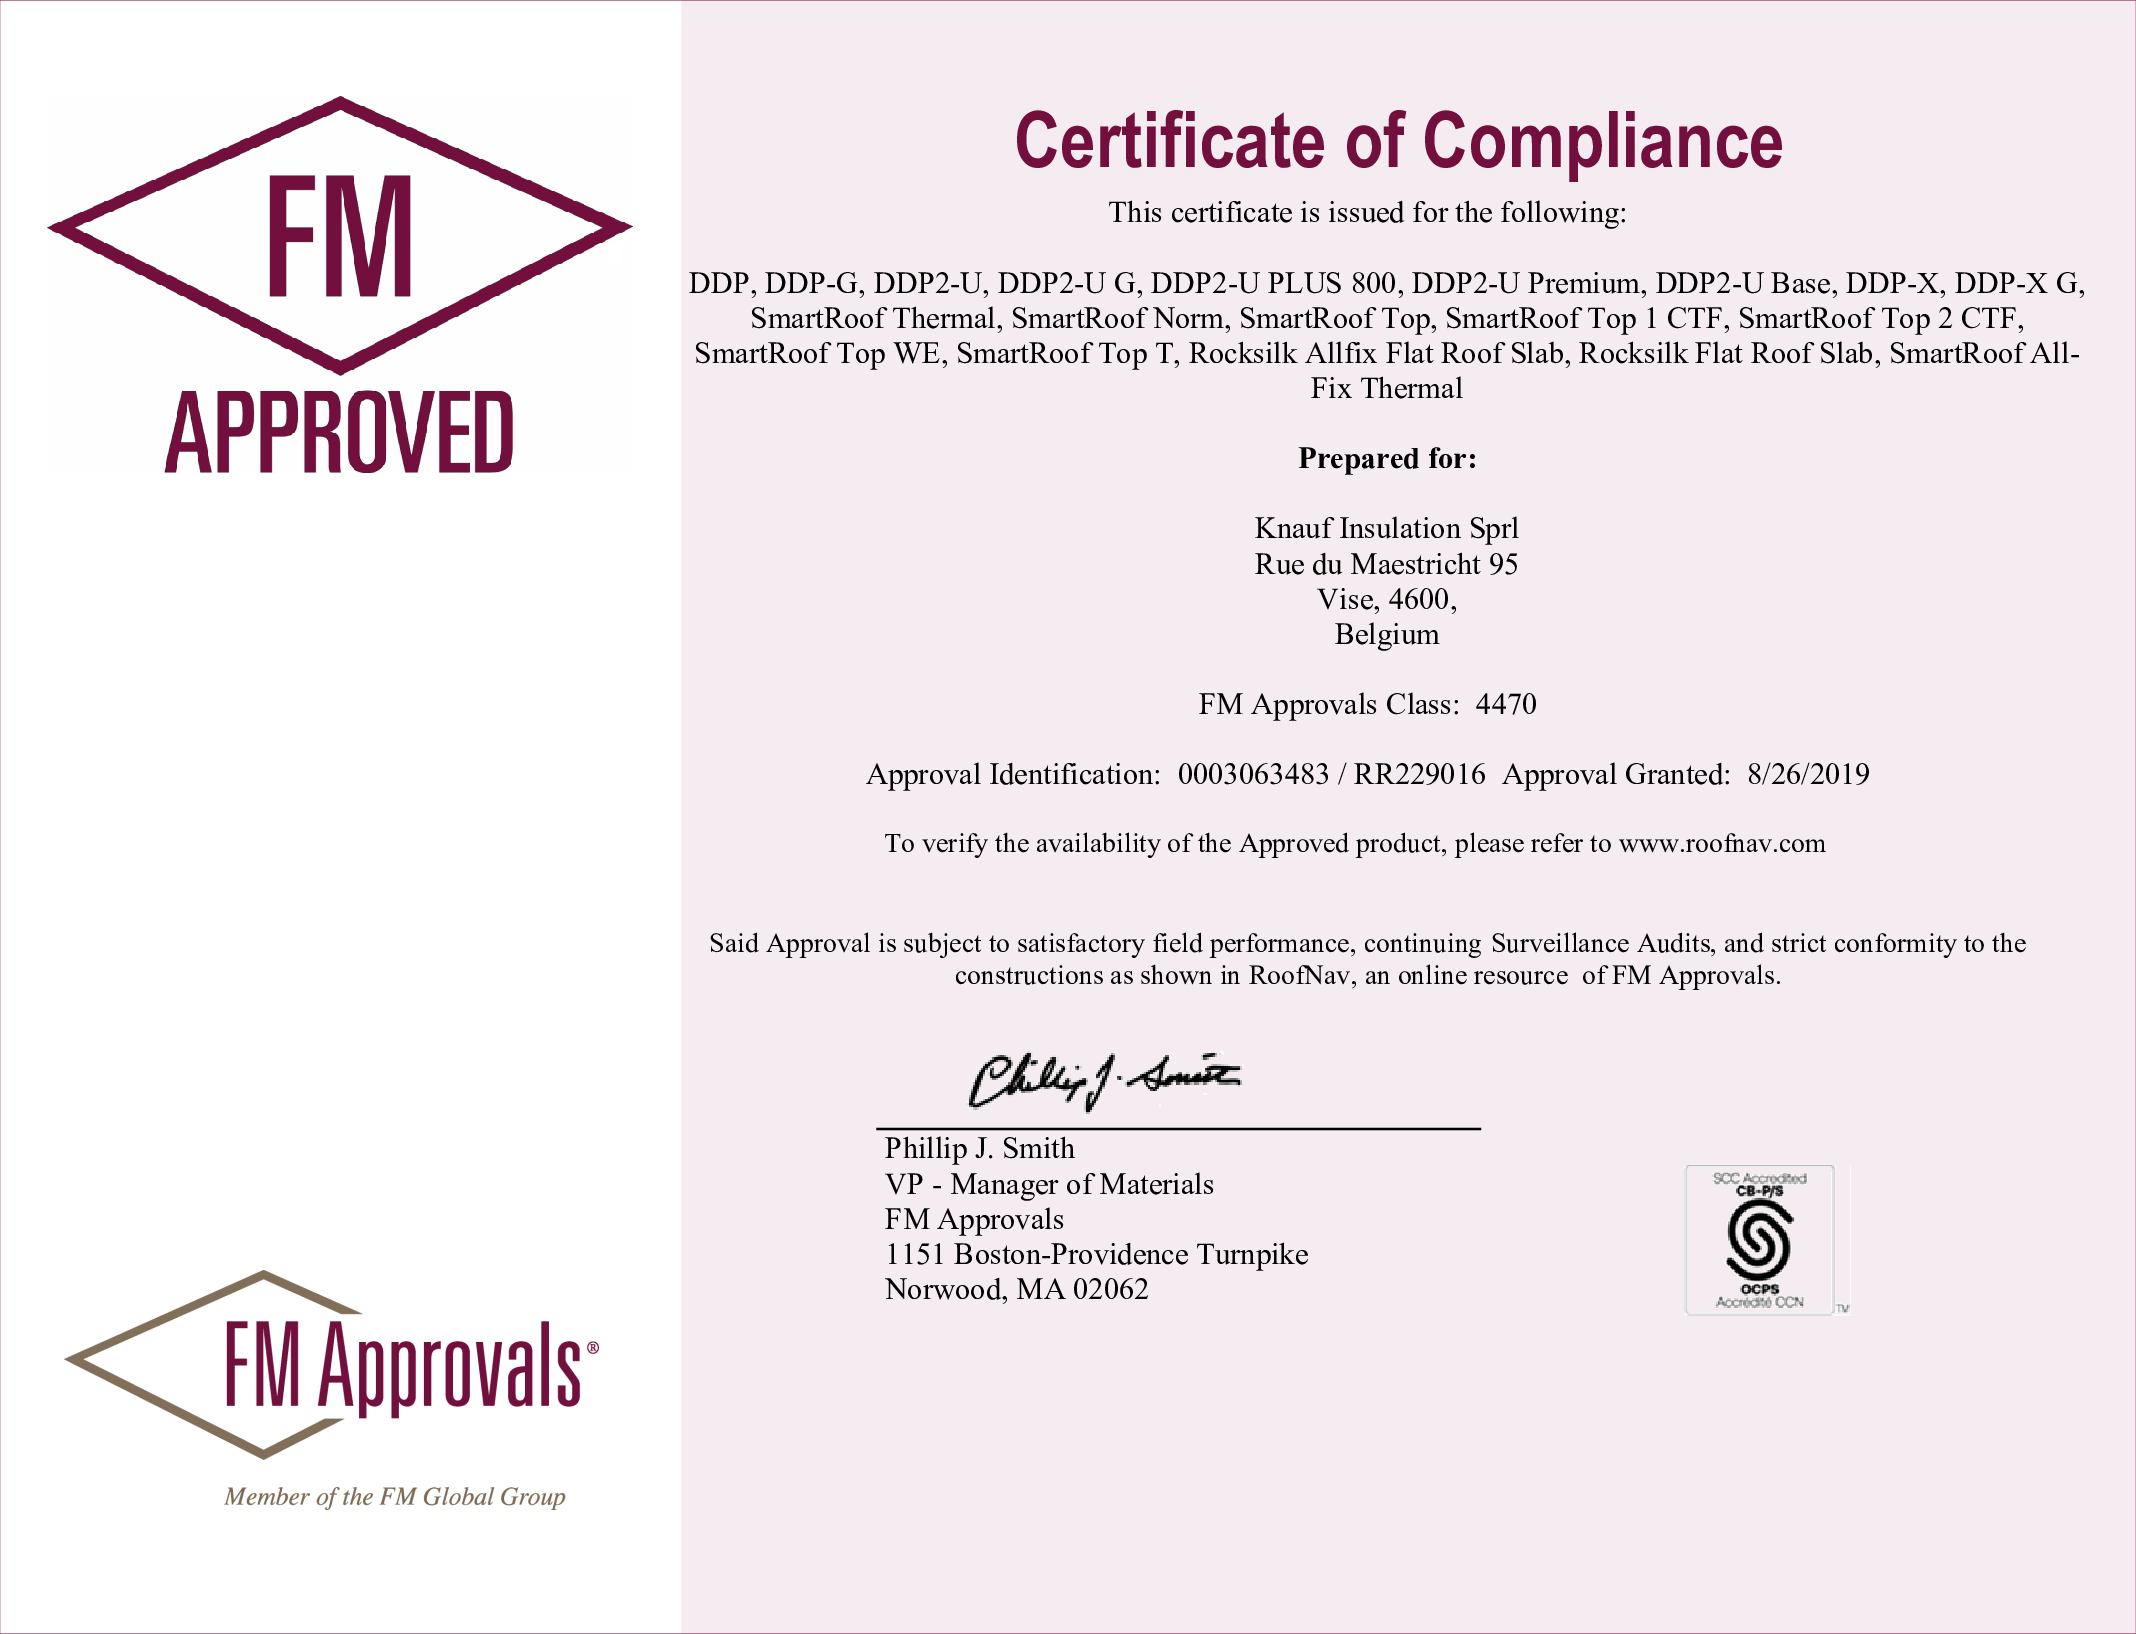 FM Approval - Certificate of Compliance